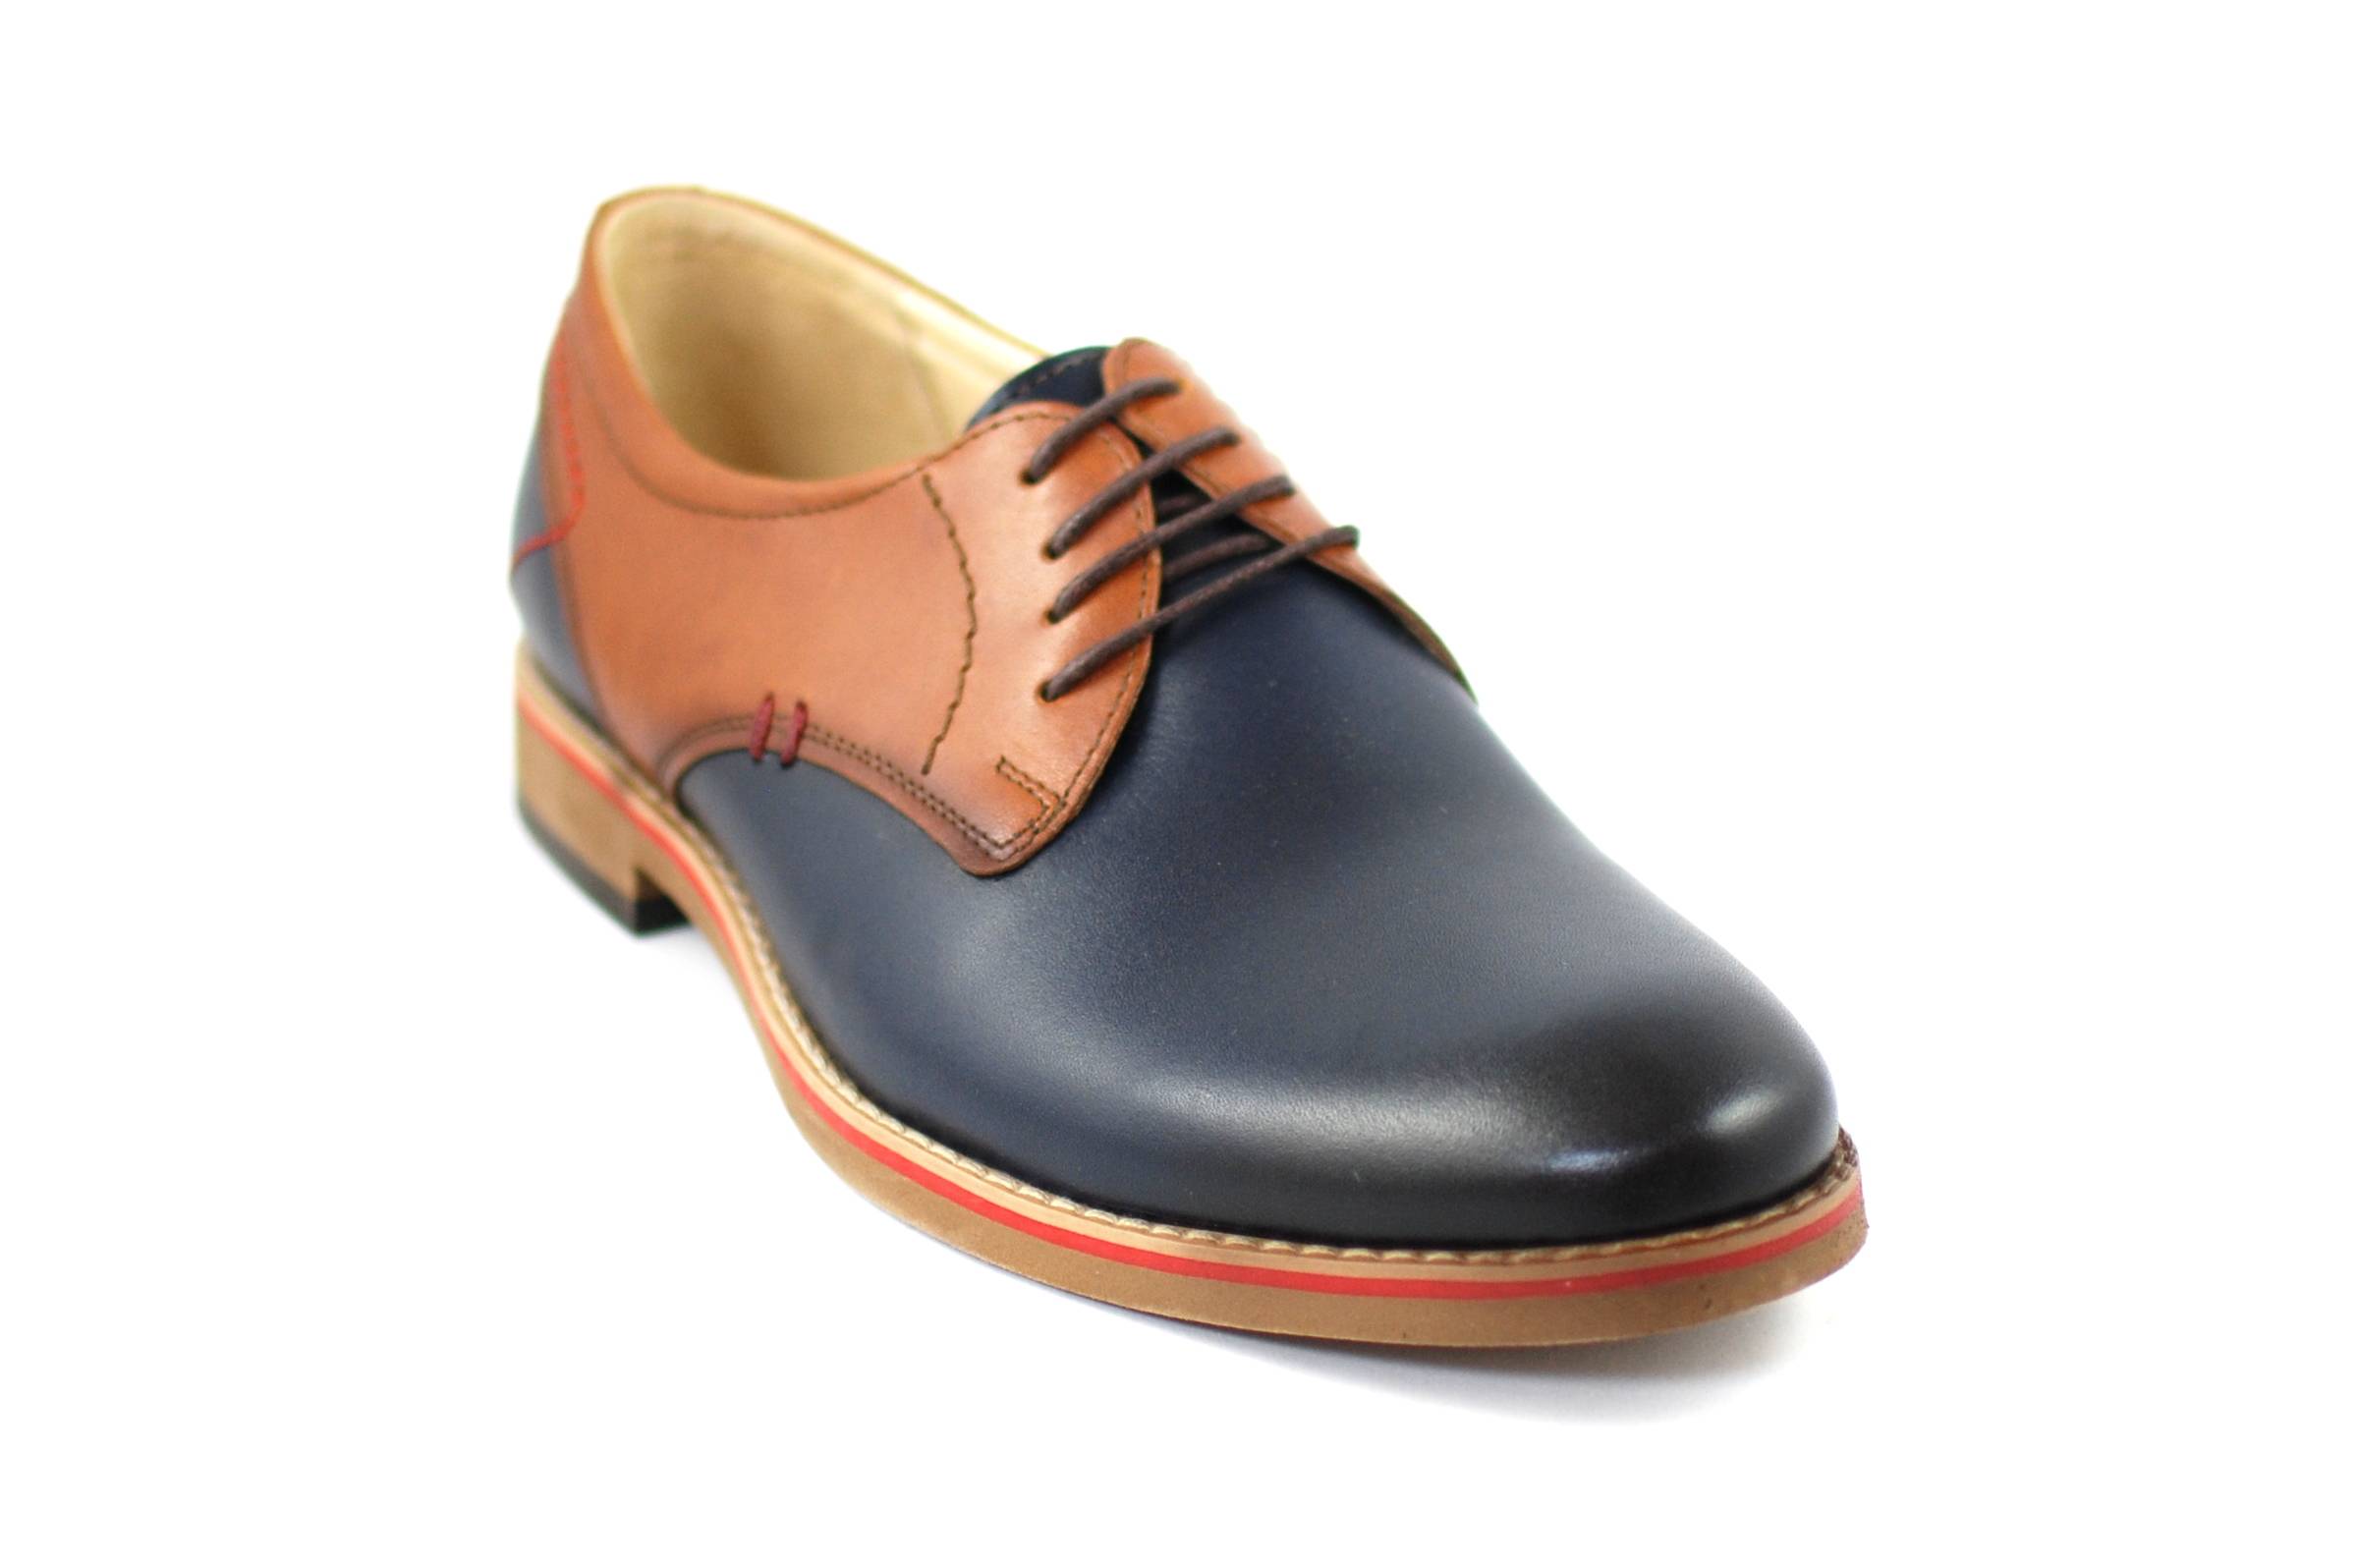 OFERTA MARIMEA 41 - Pantofi barbati casual din piele naturala bleumarin cu maro - LSIRNEVERMBLM